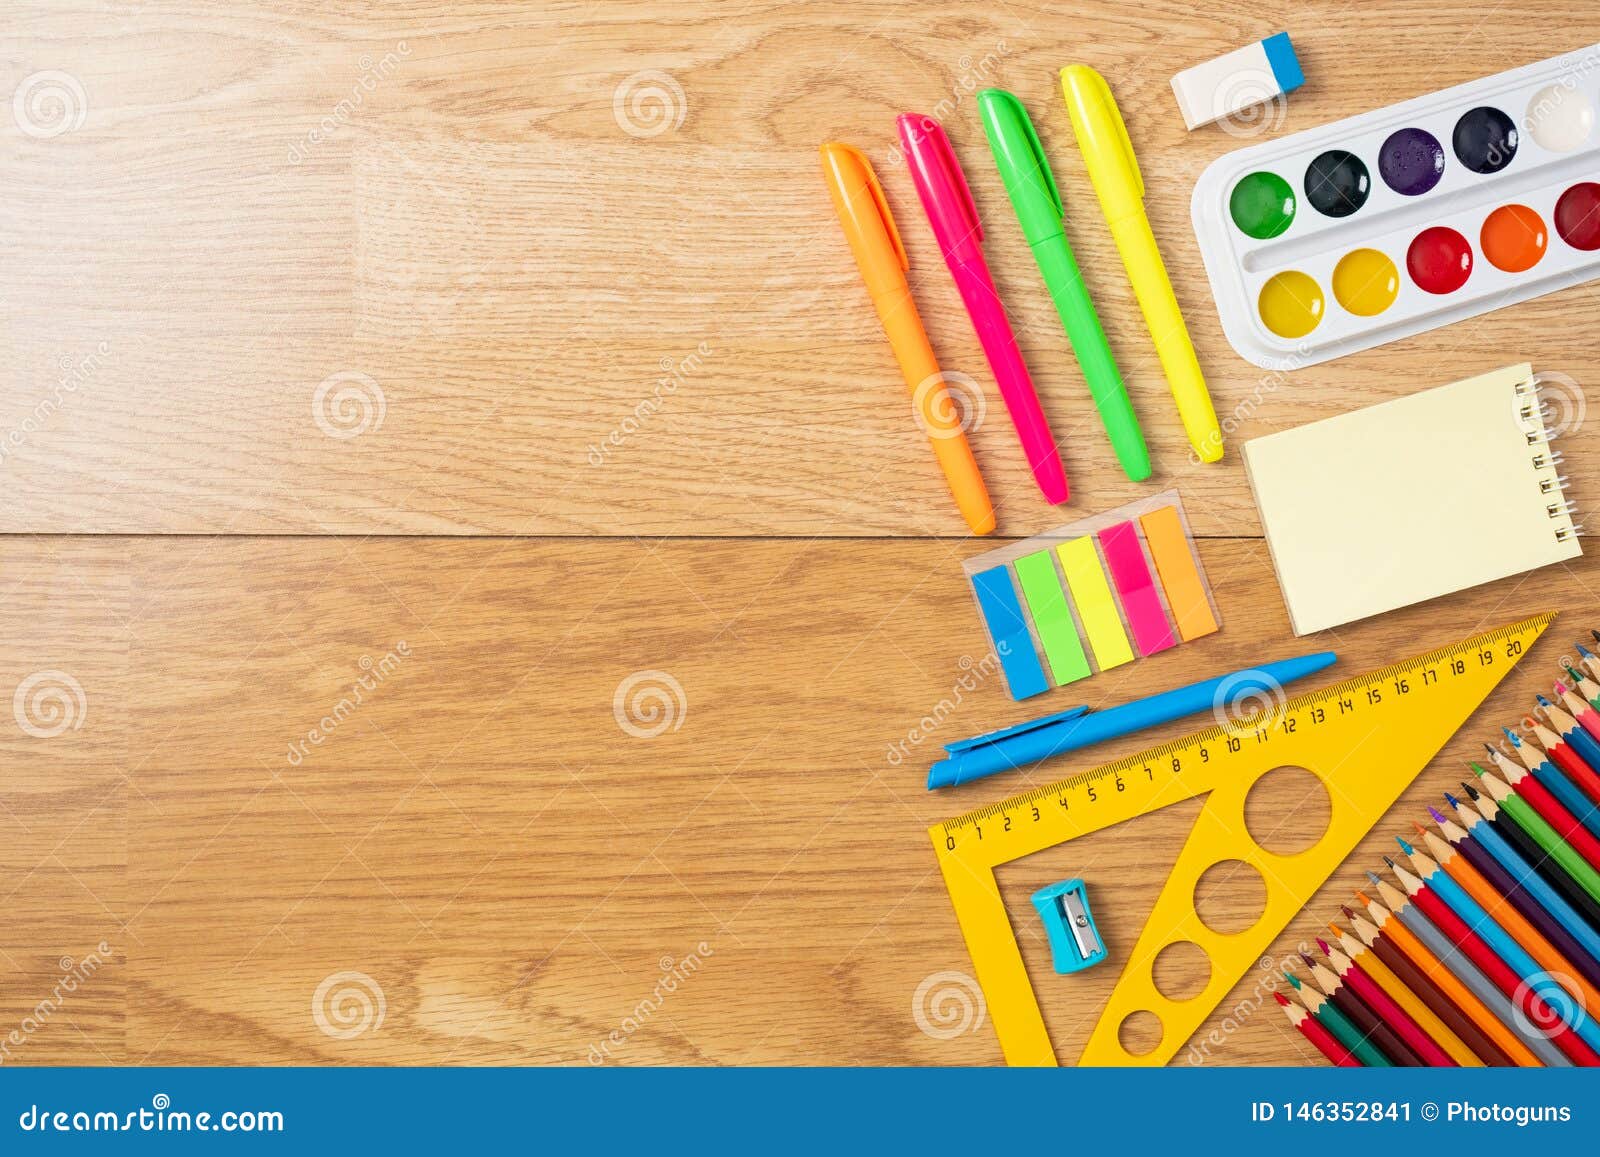 School supplies on wooden desk. Kid creativity flat lay Stock Photo by rawf8